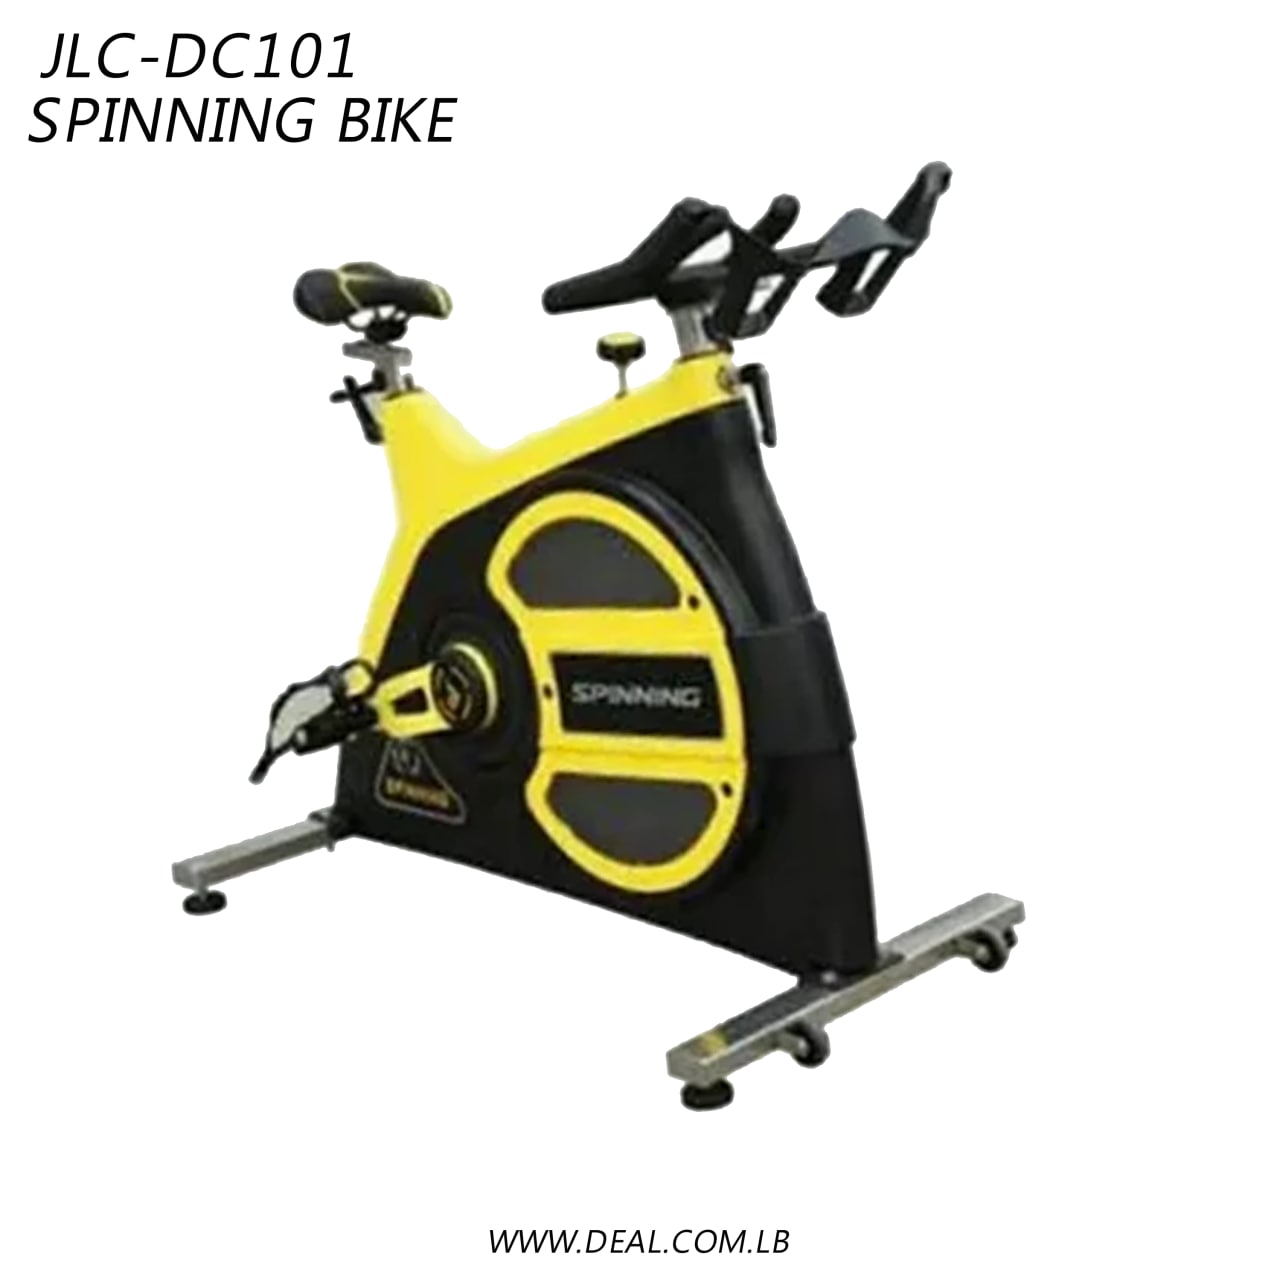 JLC-DC101 | Spinning bike